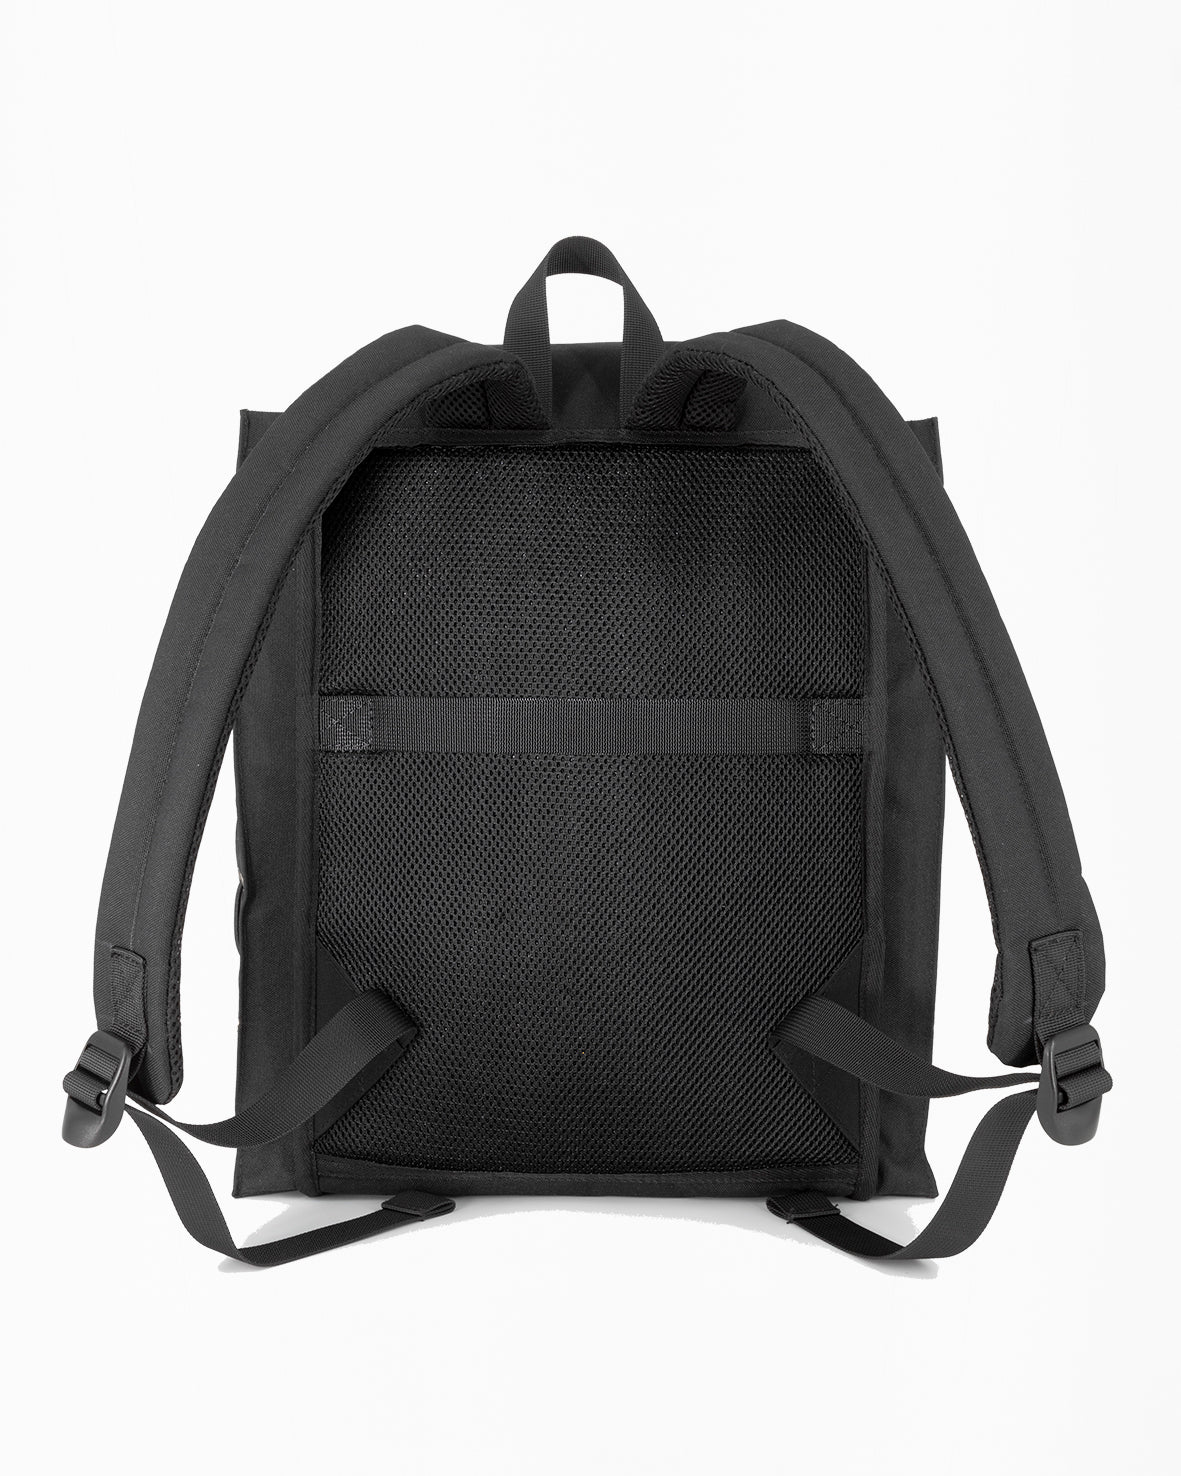 SERTUM Backpack